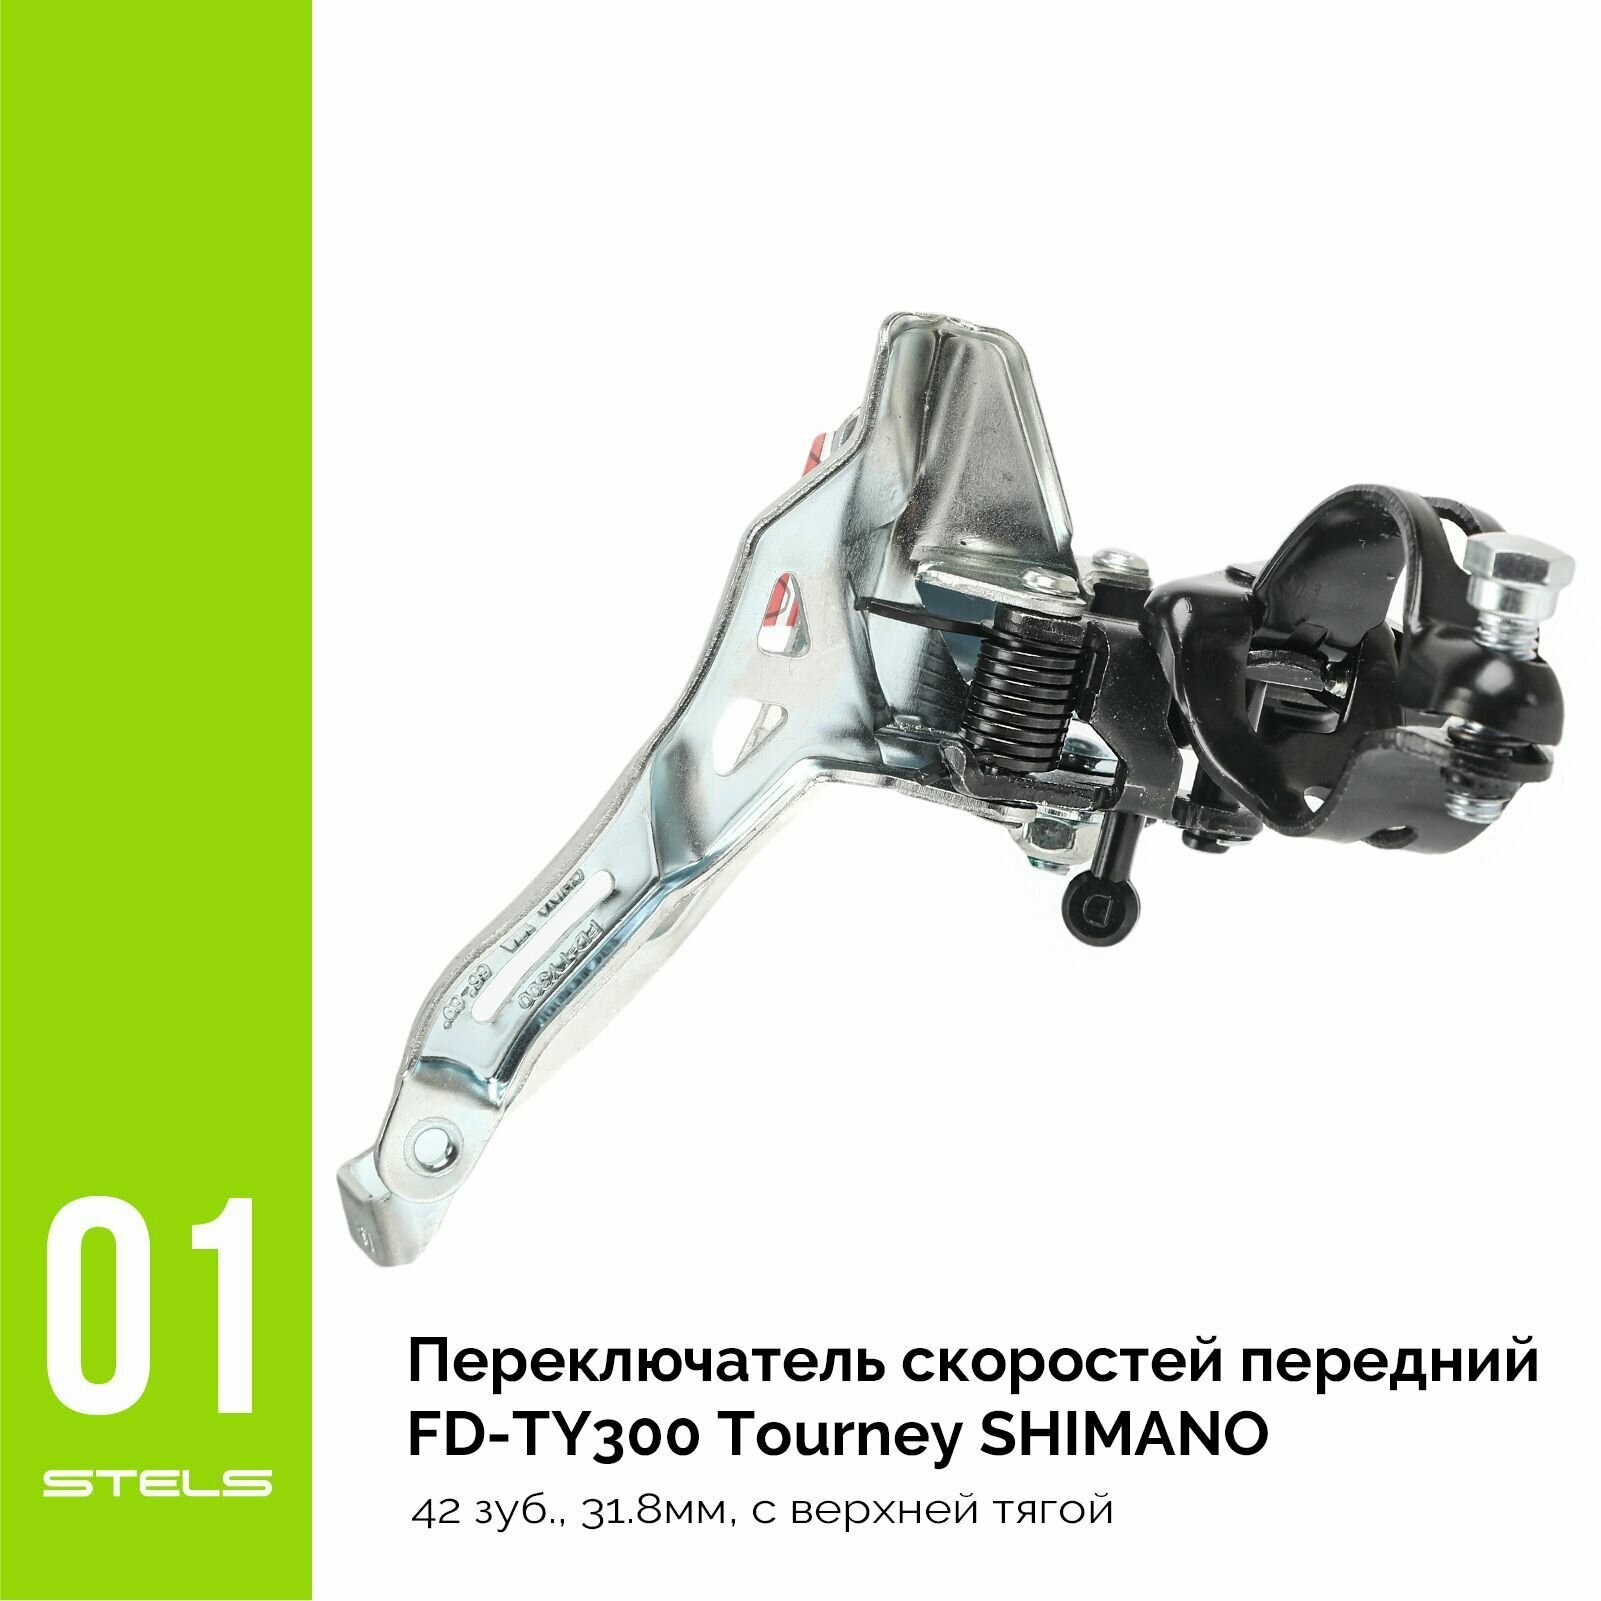 Переключатель скоростей передний FD-TY300 Tourney SHIMANO 42 зуб, 31.8мм, с верхней тягой NEW